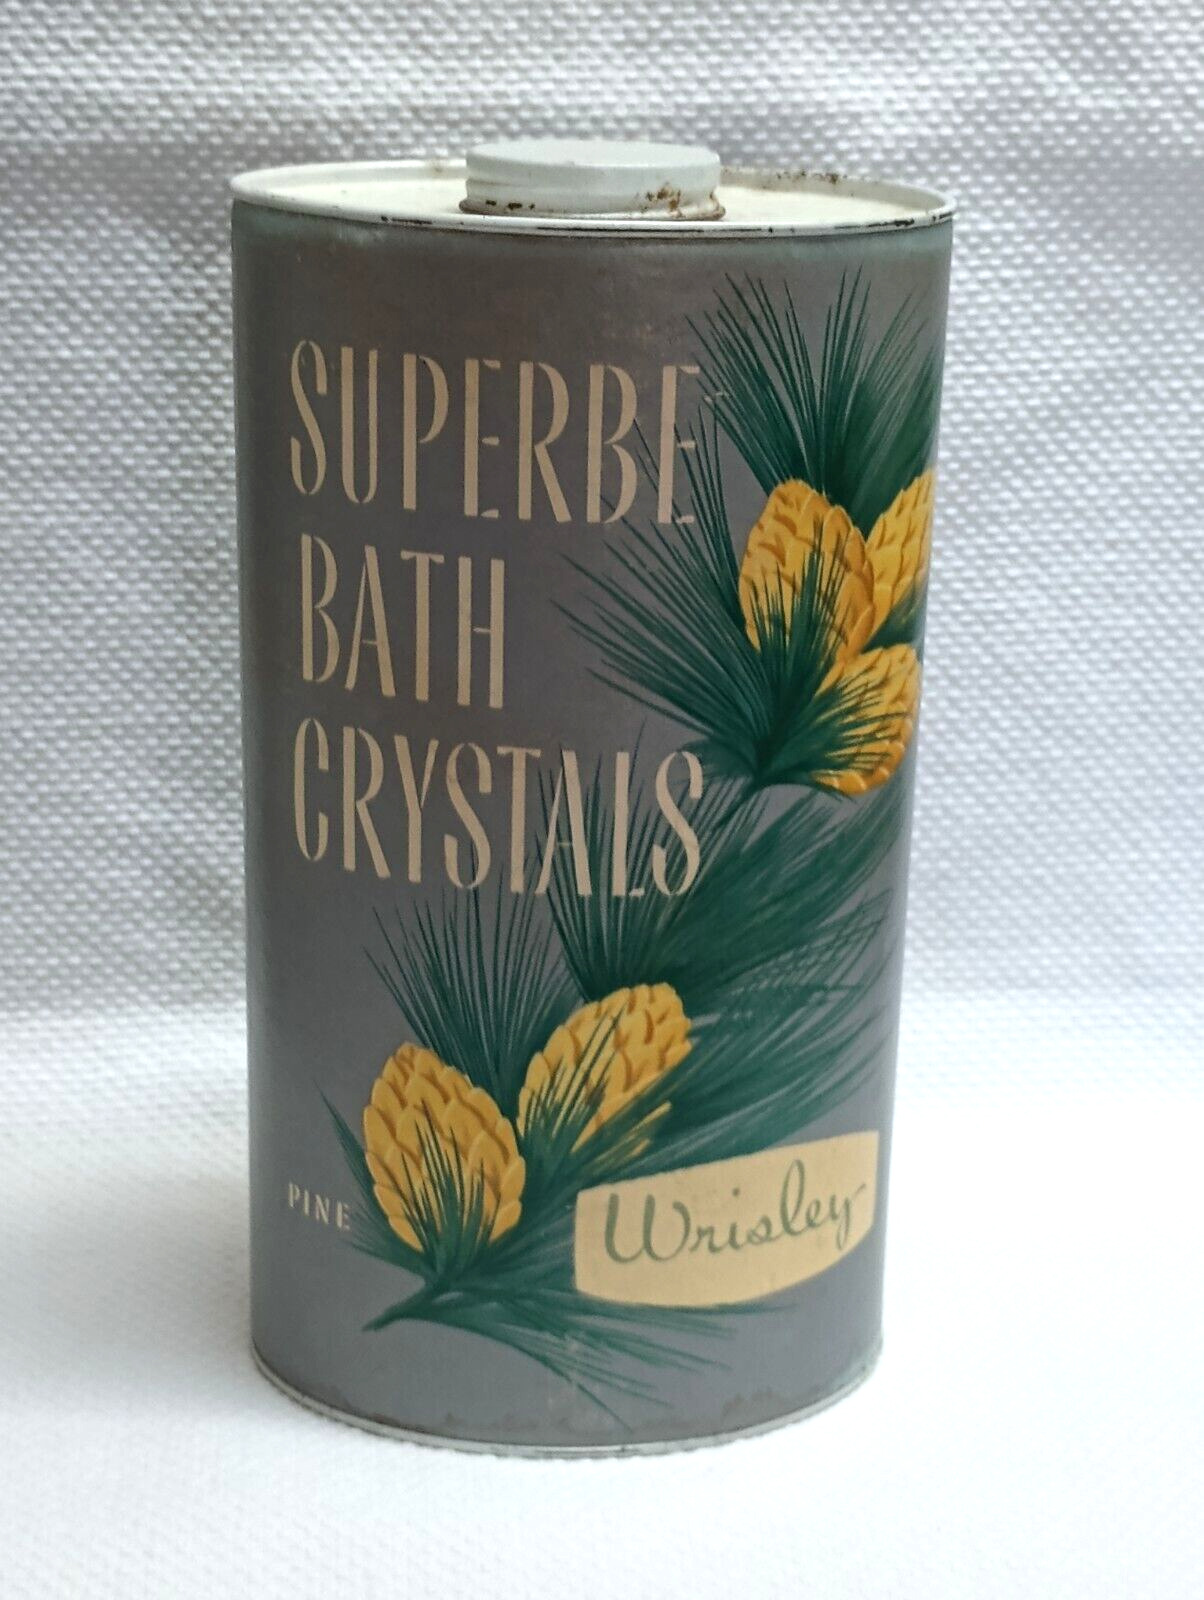 VTG WRISLEY SUPERBE BATH CRYSTALS CONTAINER ~ 1940\'s - 1950\'s